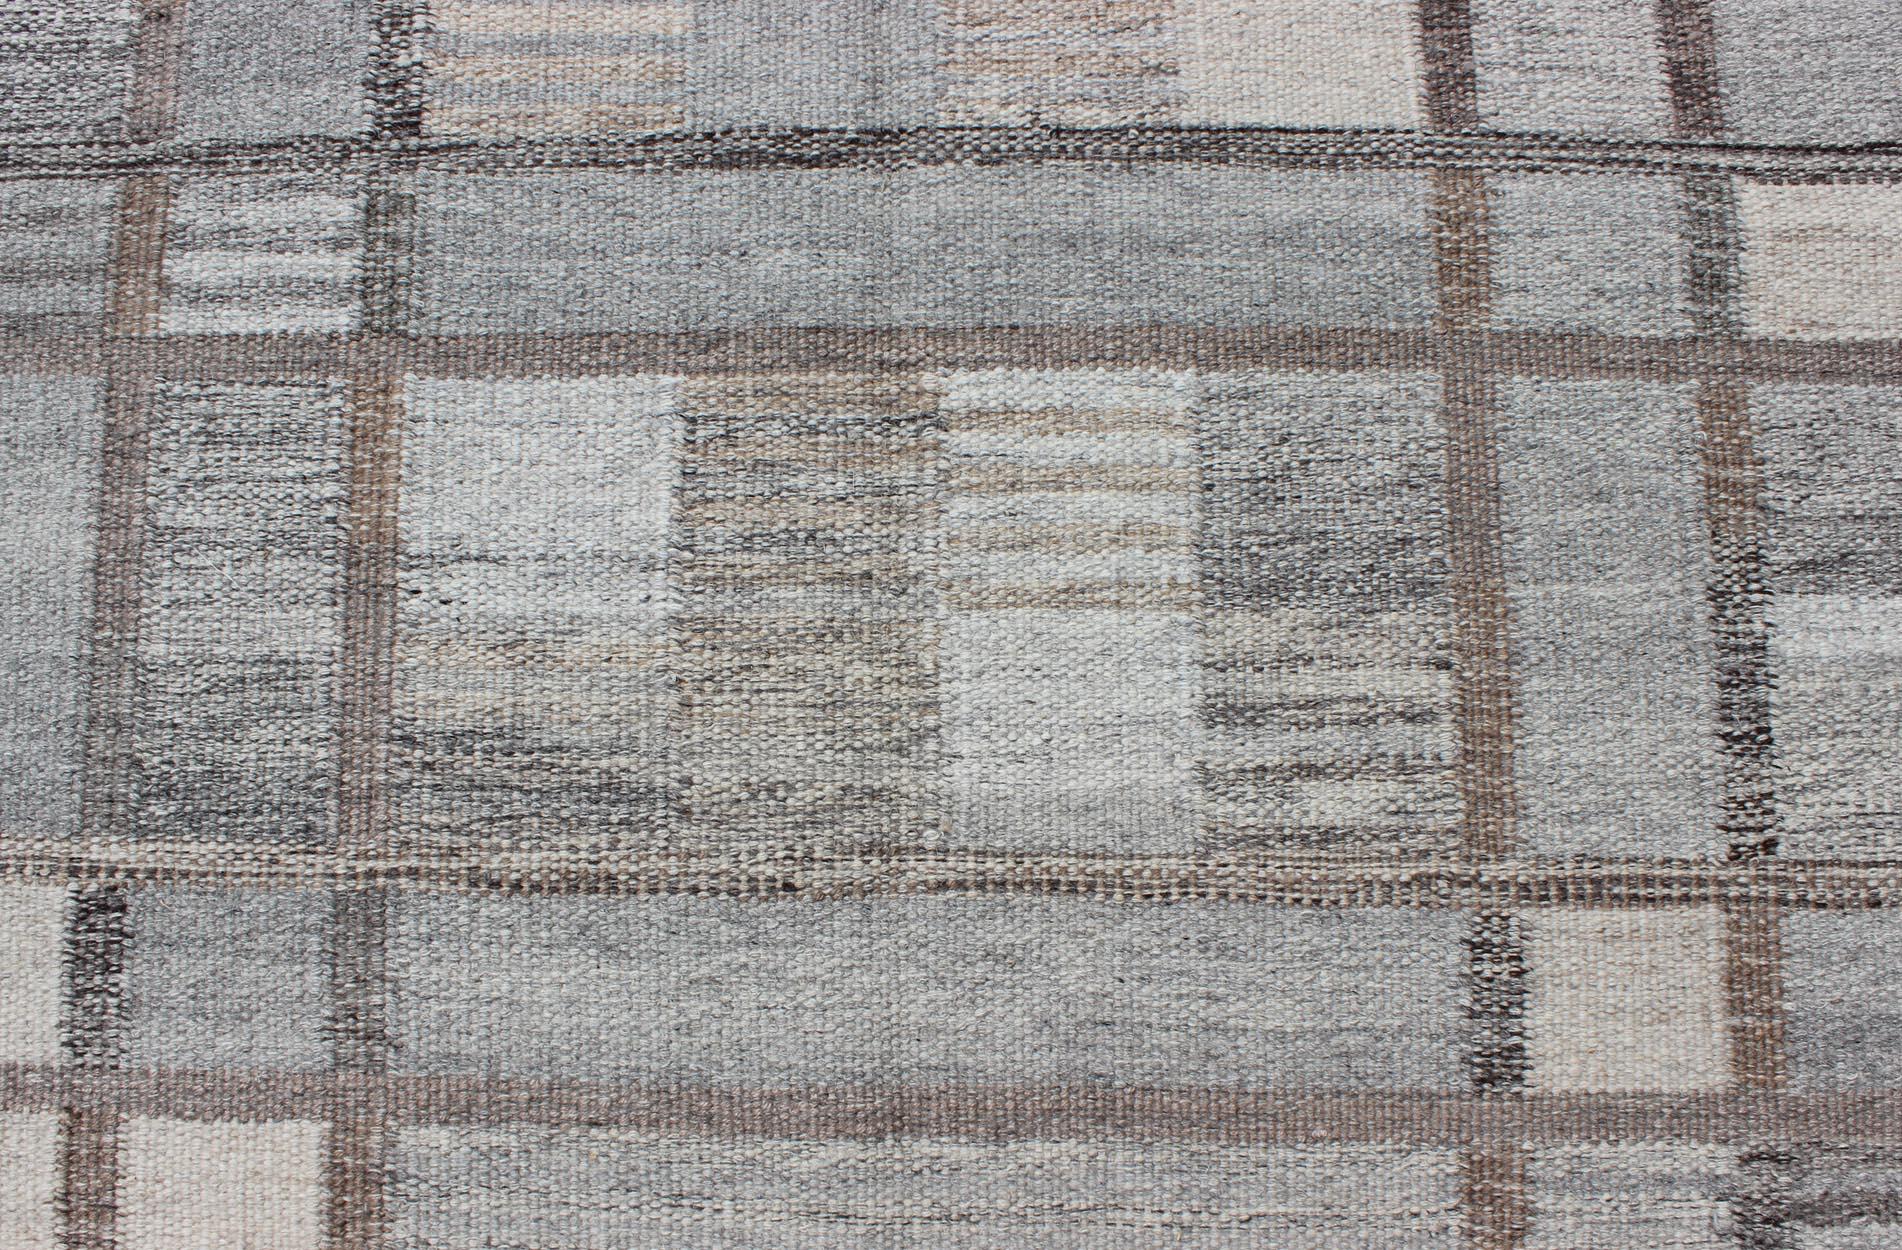 Hand-Woven Geometric Stripe Block Modern Scandinavian Flat-Weave Design Rug in Gray Tones For Sale